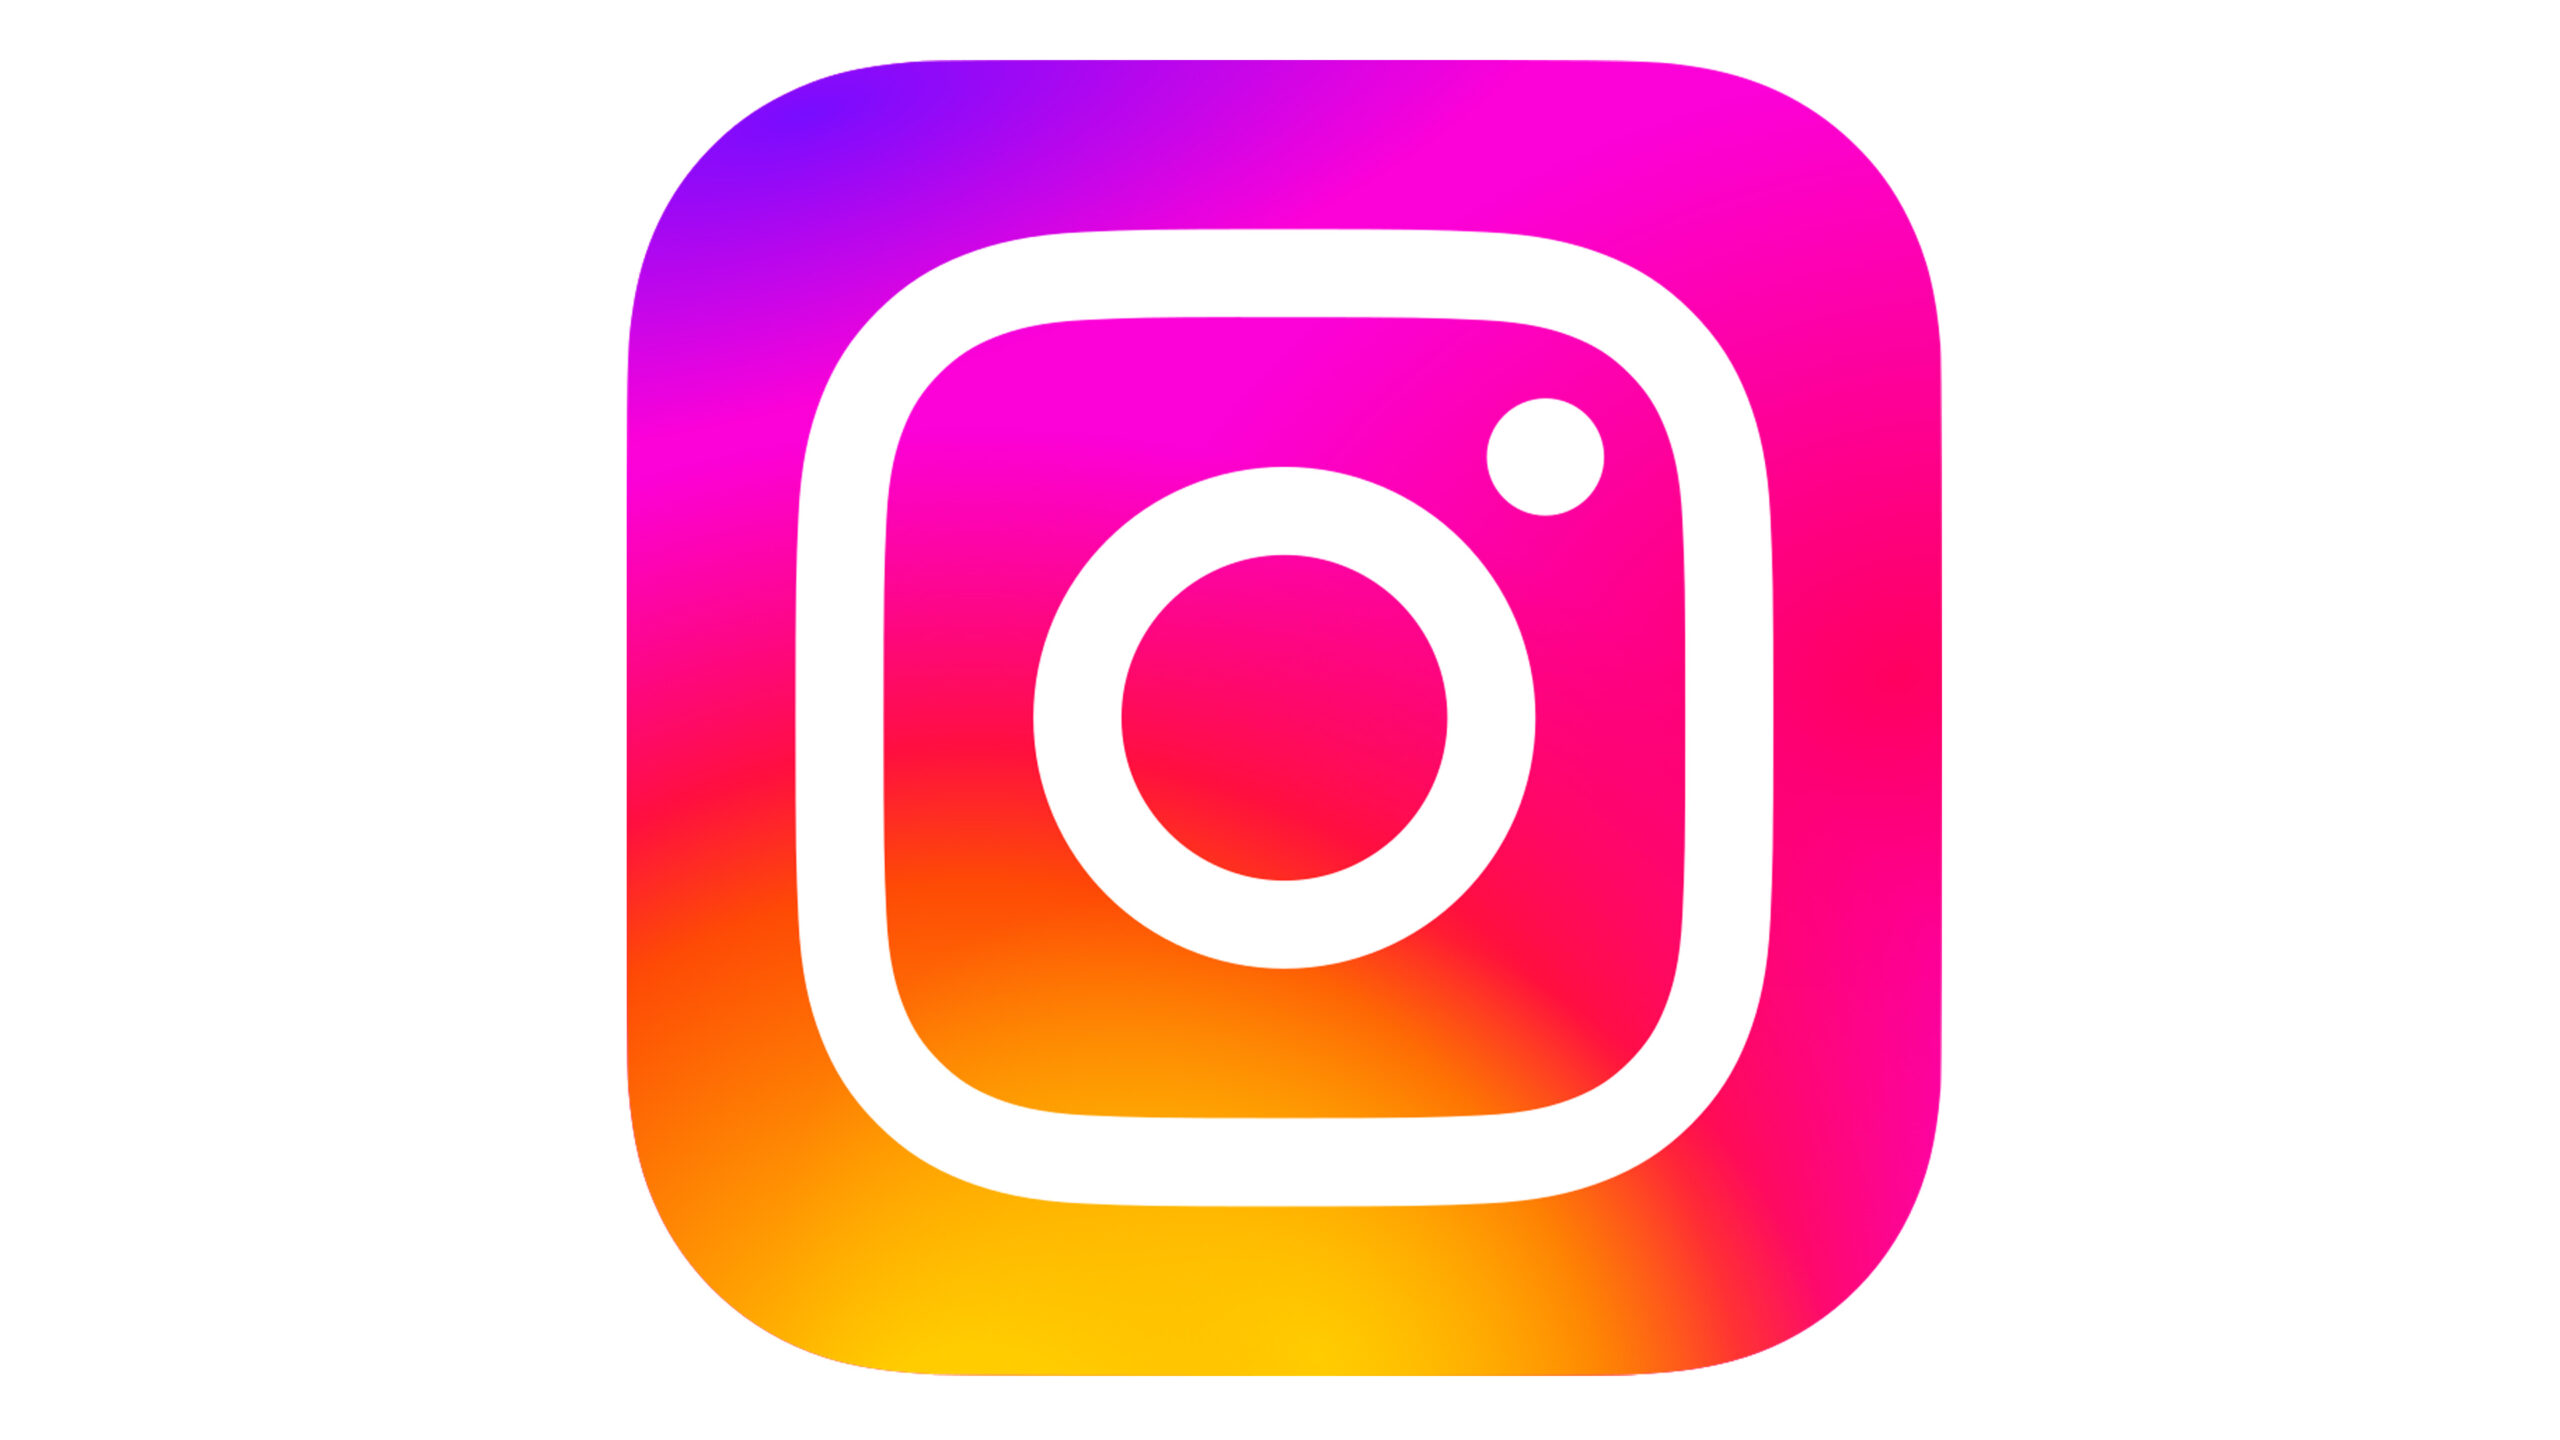 Instagram logo icon in vector .EPS, .SVG formats - Brandlogos.net